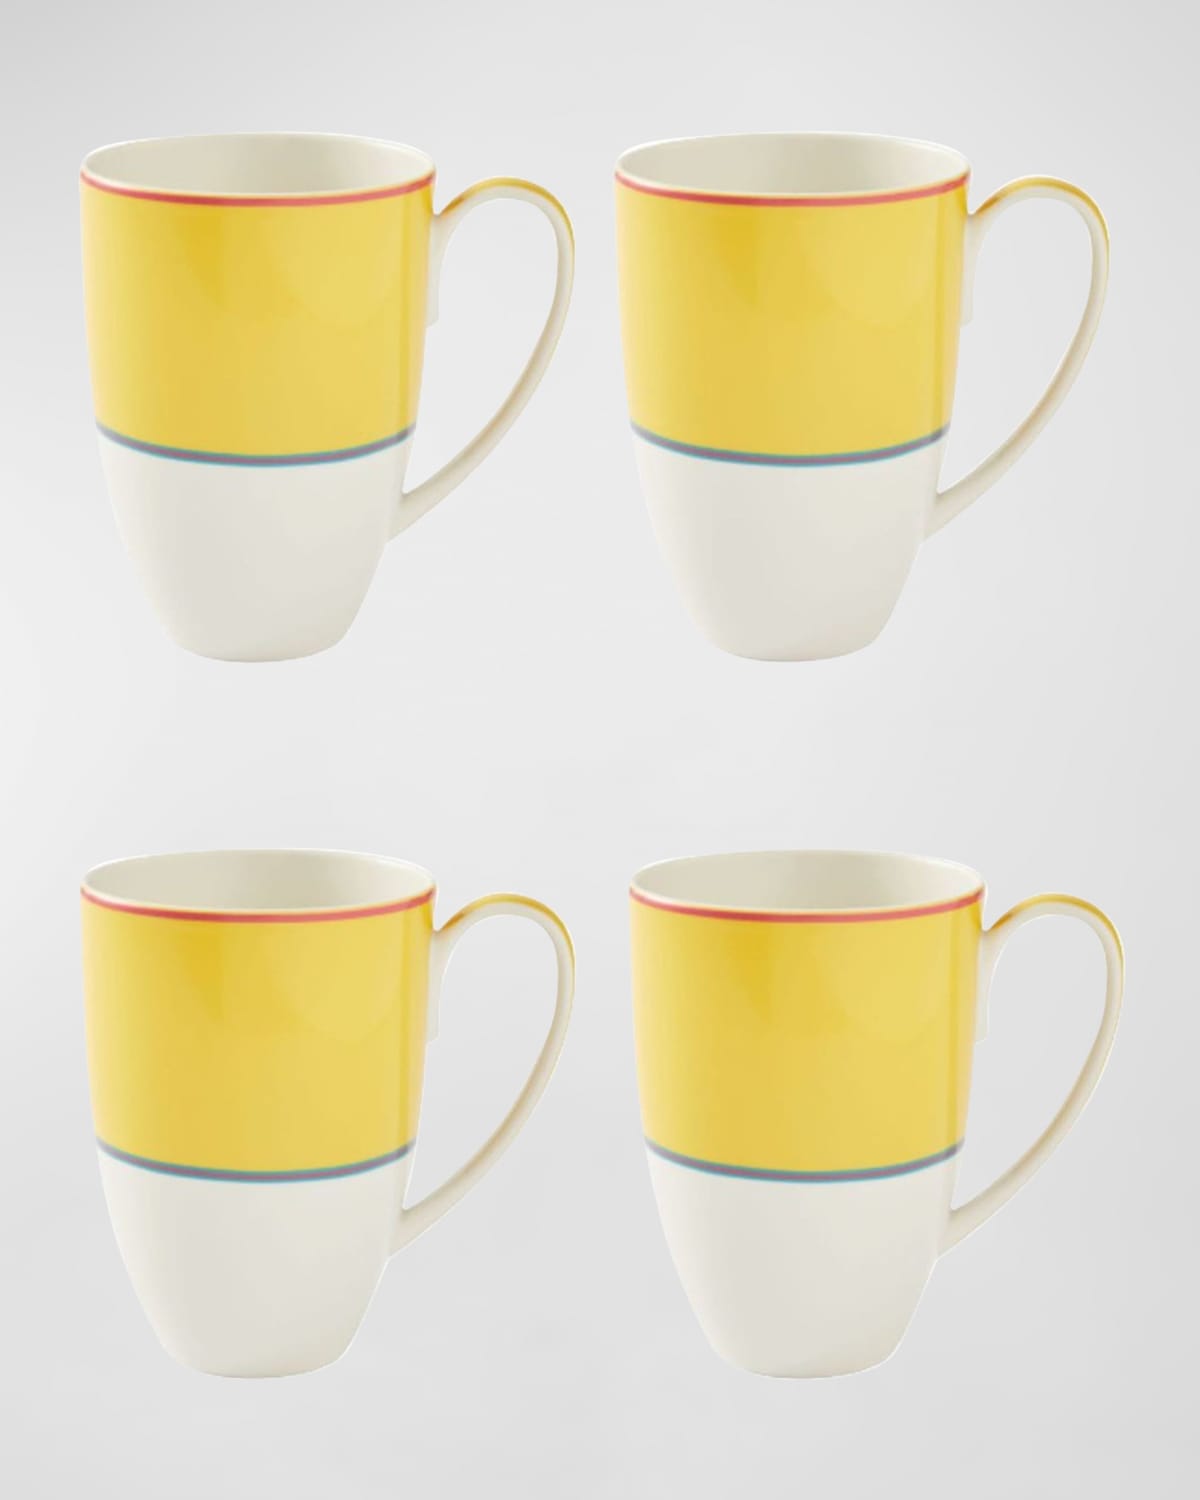 Kit Kemp For Spode Calypso 17oz Mugs, Set Of 4 In Yellow